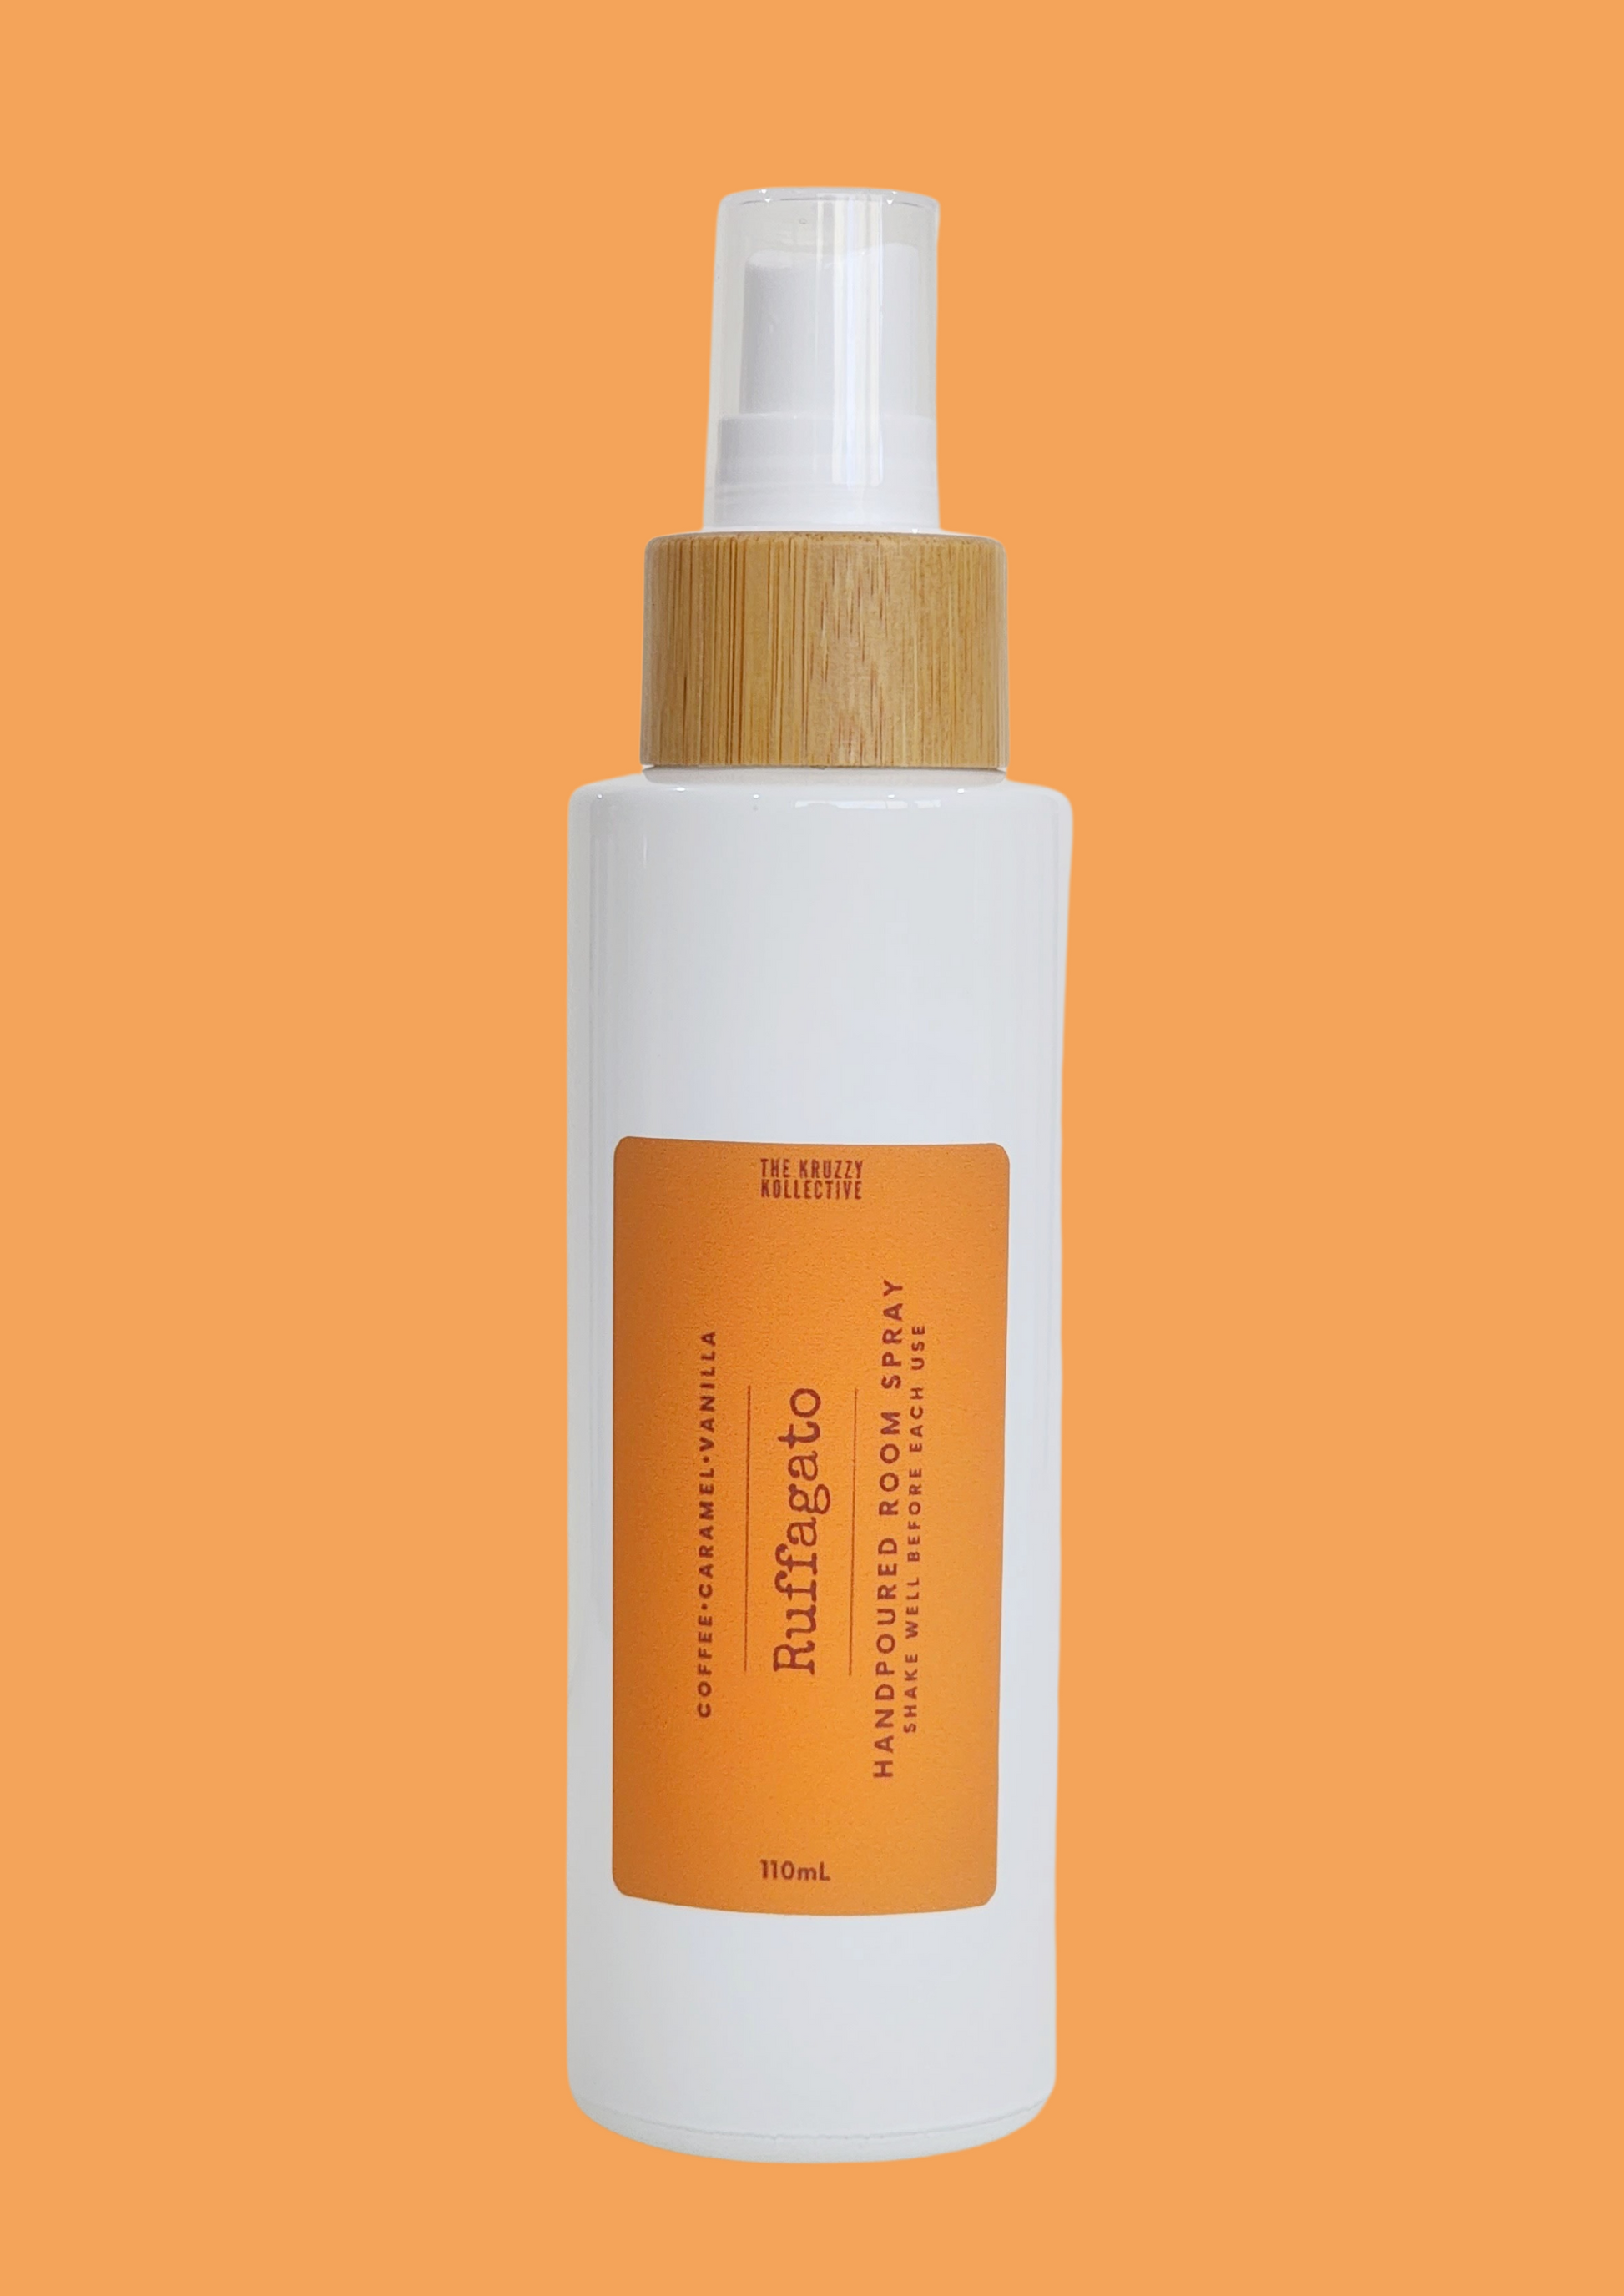 home fragrance spray odor eliminators eco friendly room freshener air freshener  coffee caramel vanilla